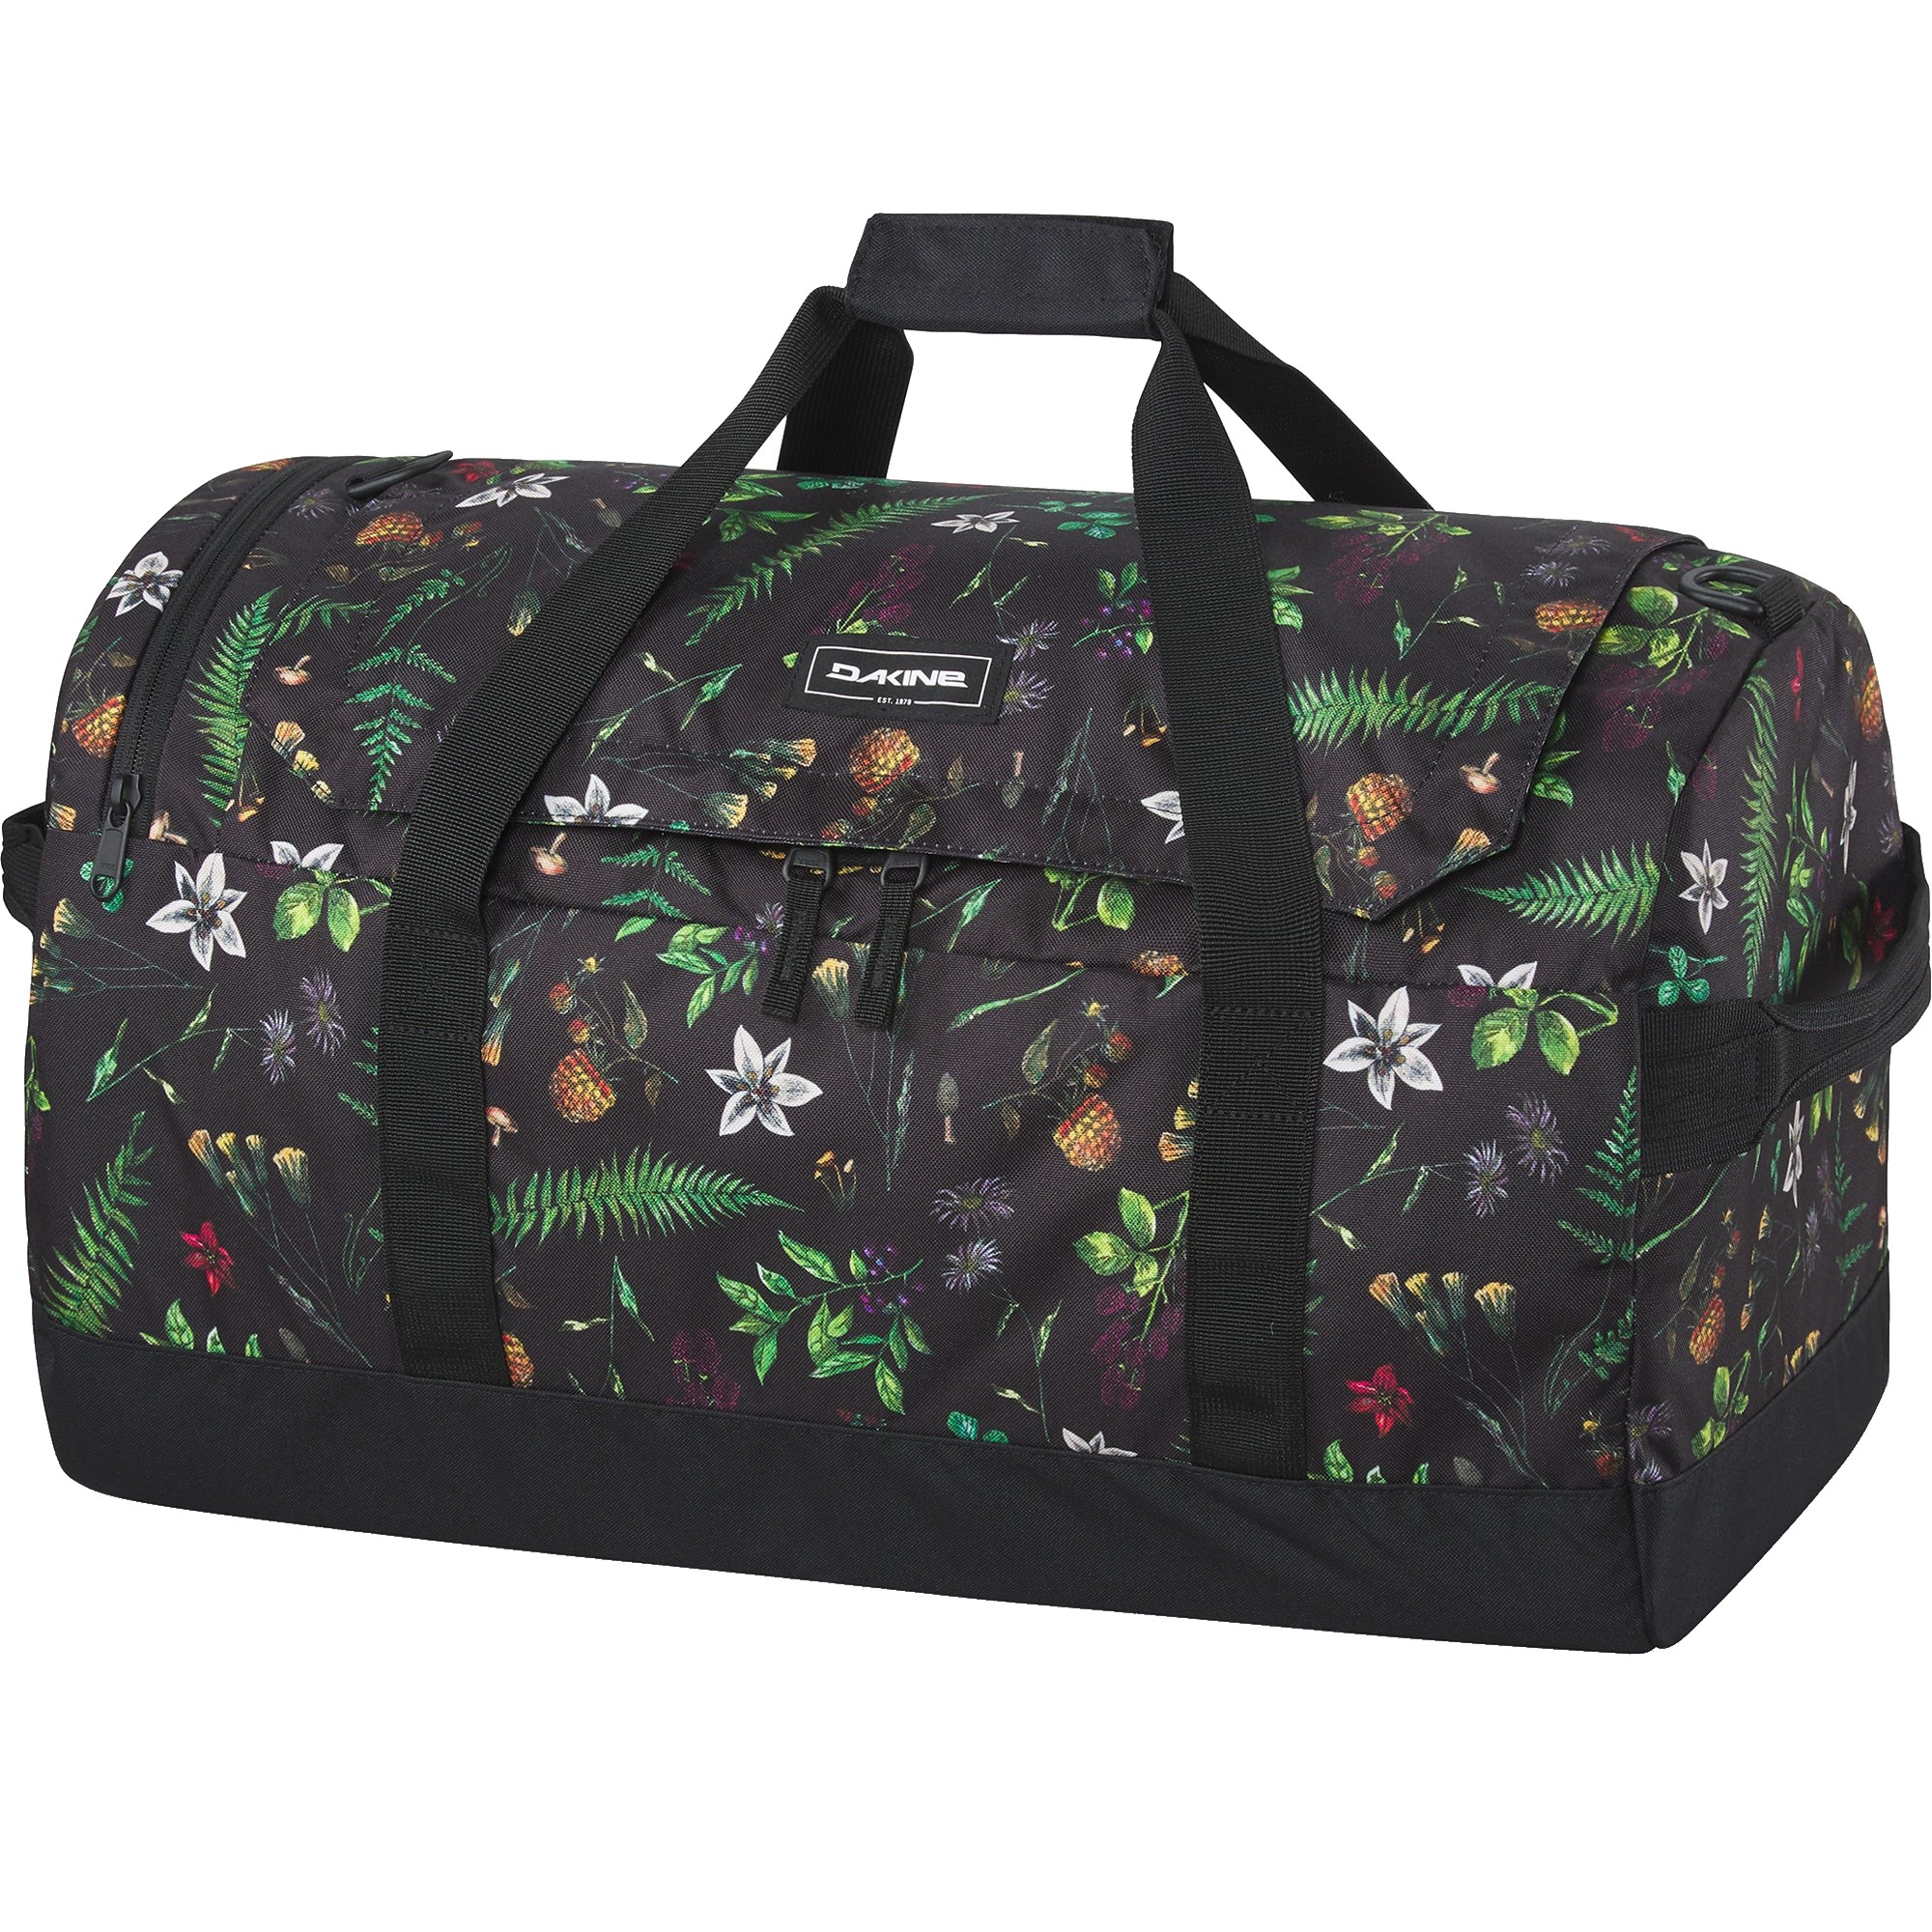 Dakine EQ Duffle Travel Luggage Bag